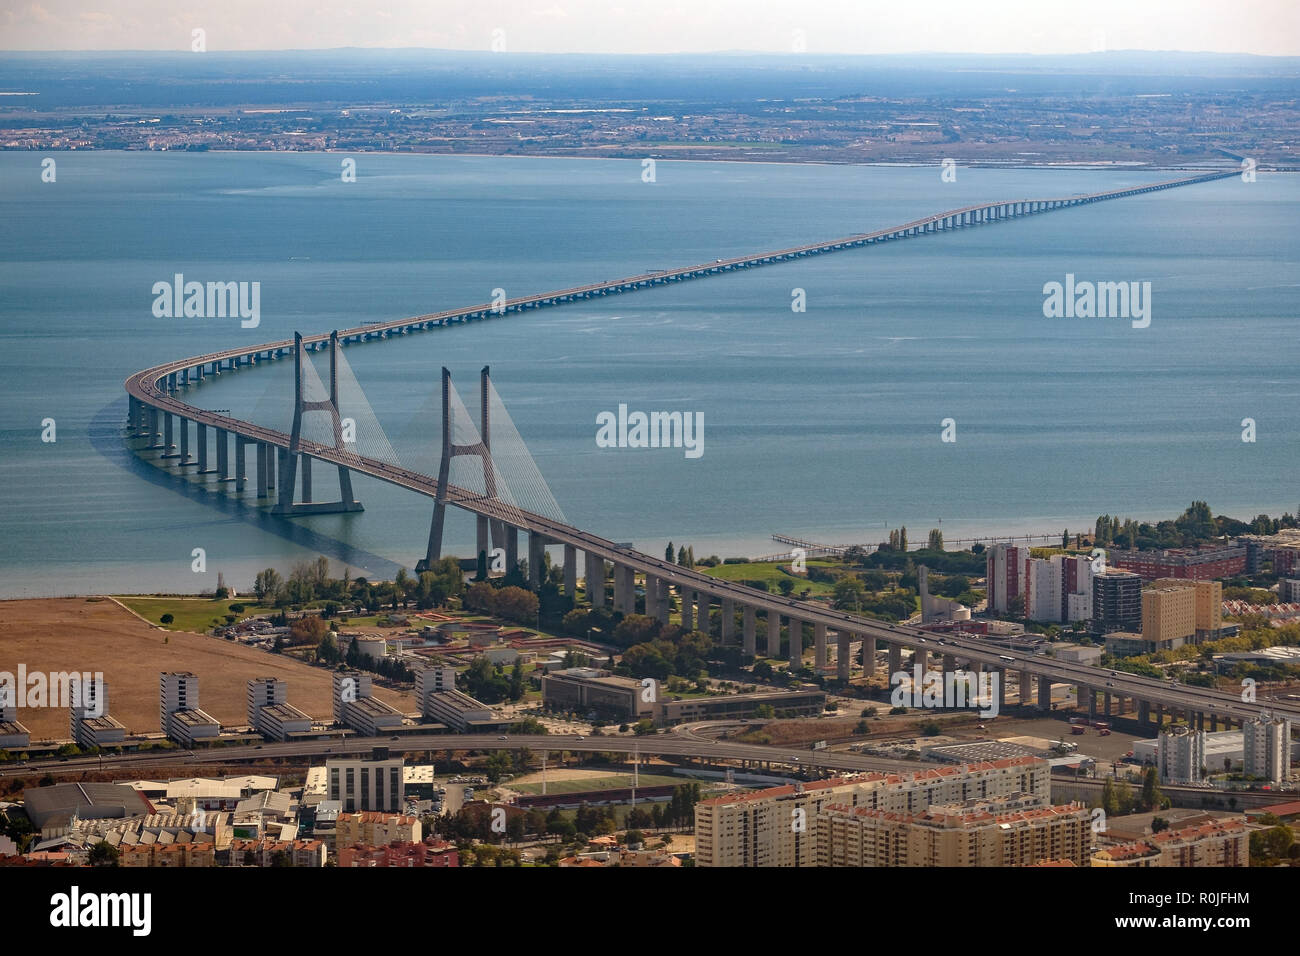 Aerial View Of The Vasco Da Gama Bridge Over The Tagus River In Lisbon Portugal Europe Stock Photo Alamy